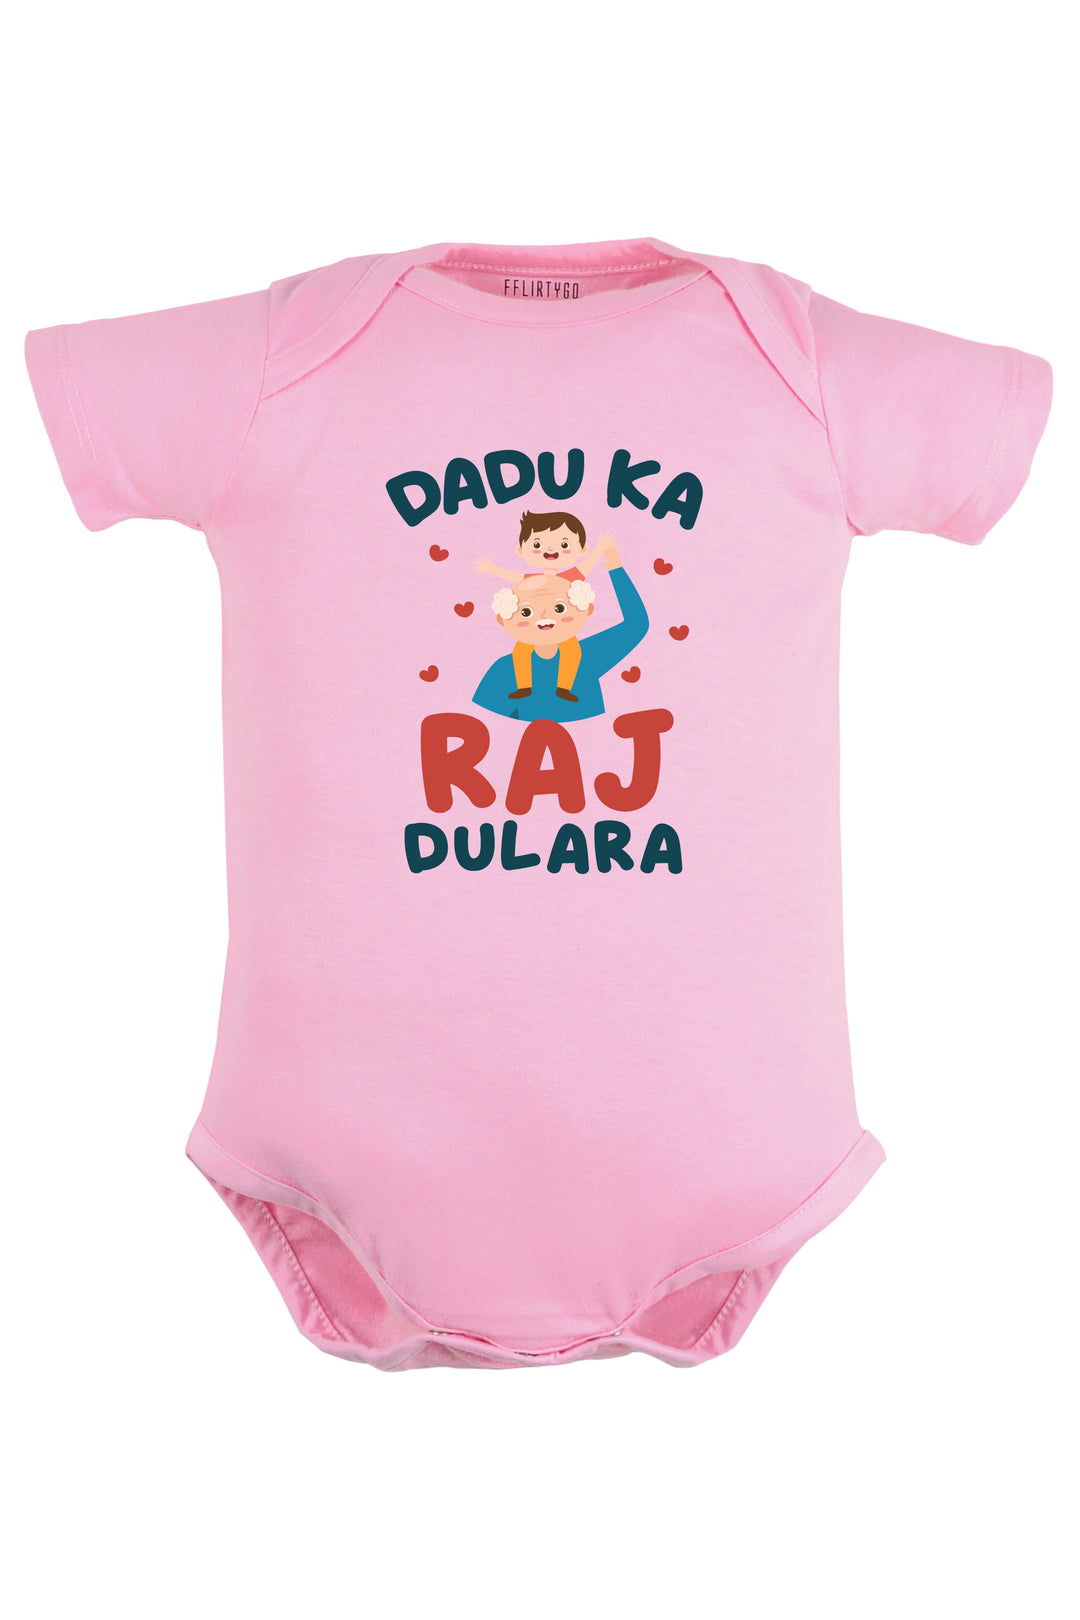 Dadu Ka Raj Dulara Baby Romper | Onesies